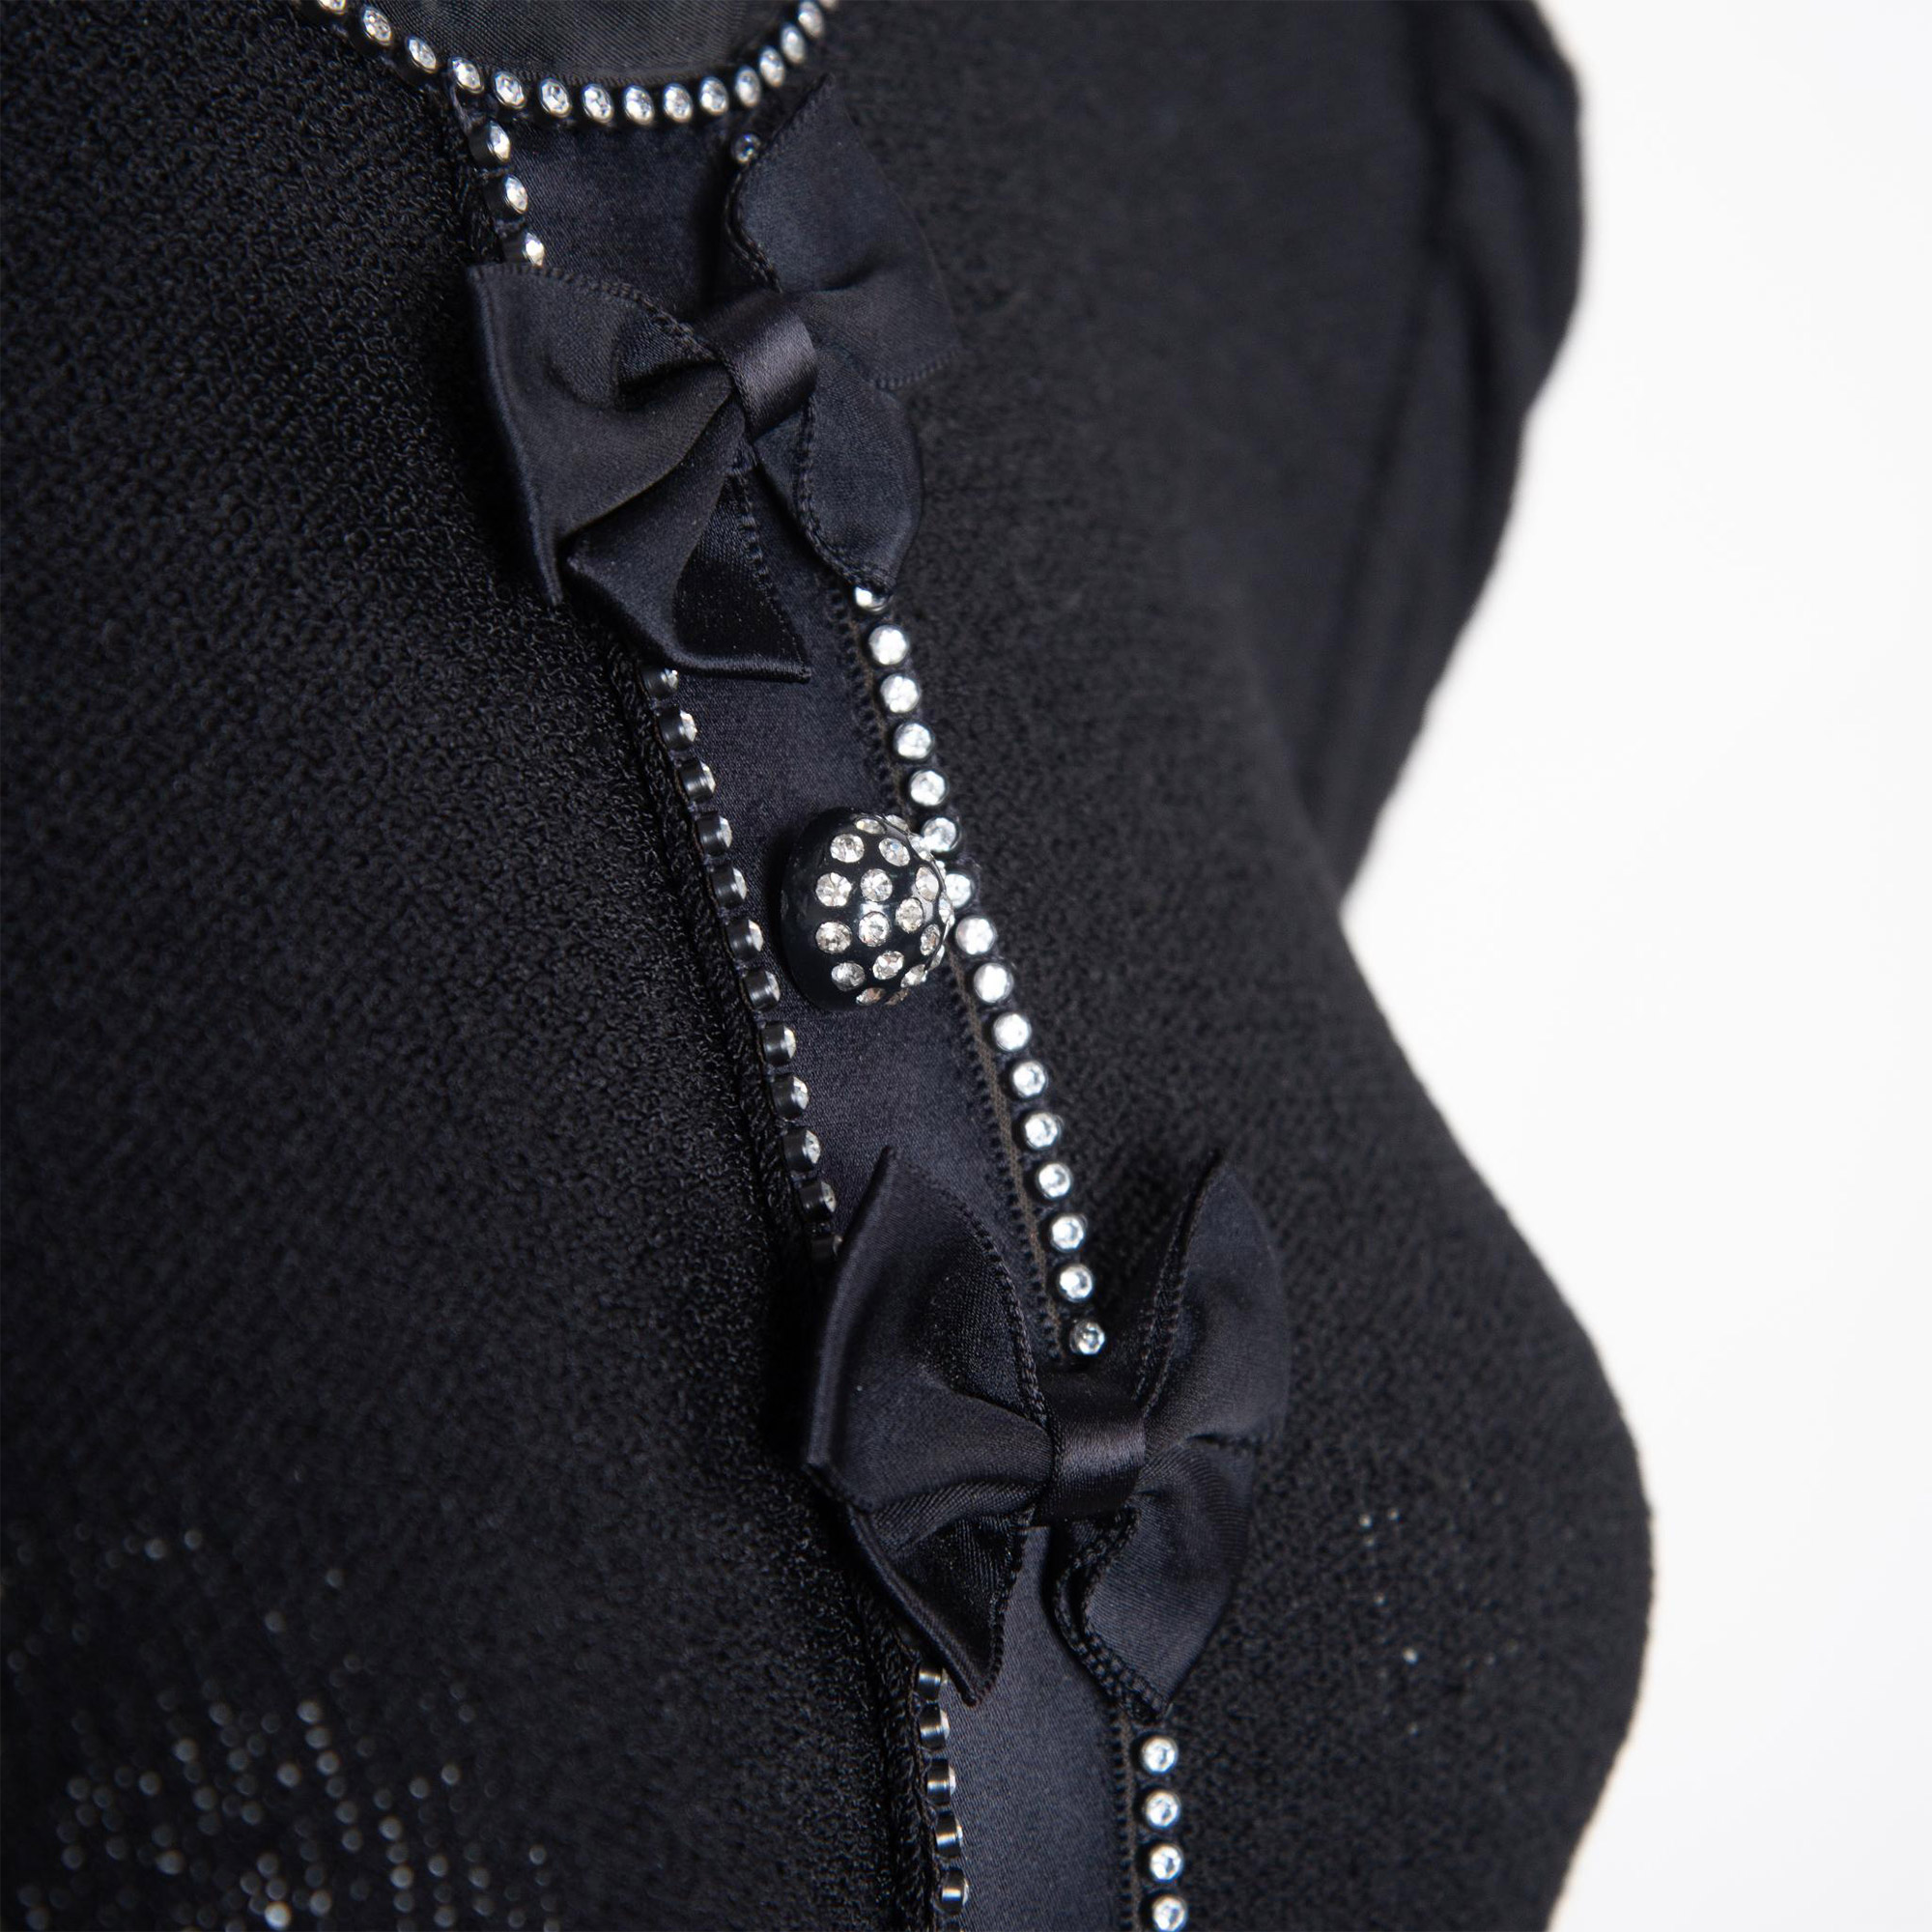 Adolfo for Neiman Marcus Rhinestone & Bow Knit Dress, Size Small - Image 2 of 8